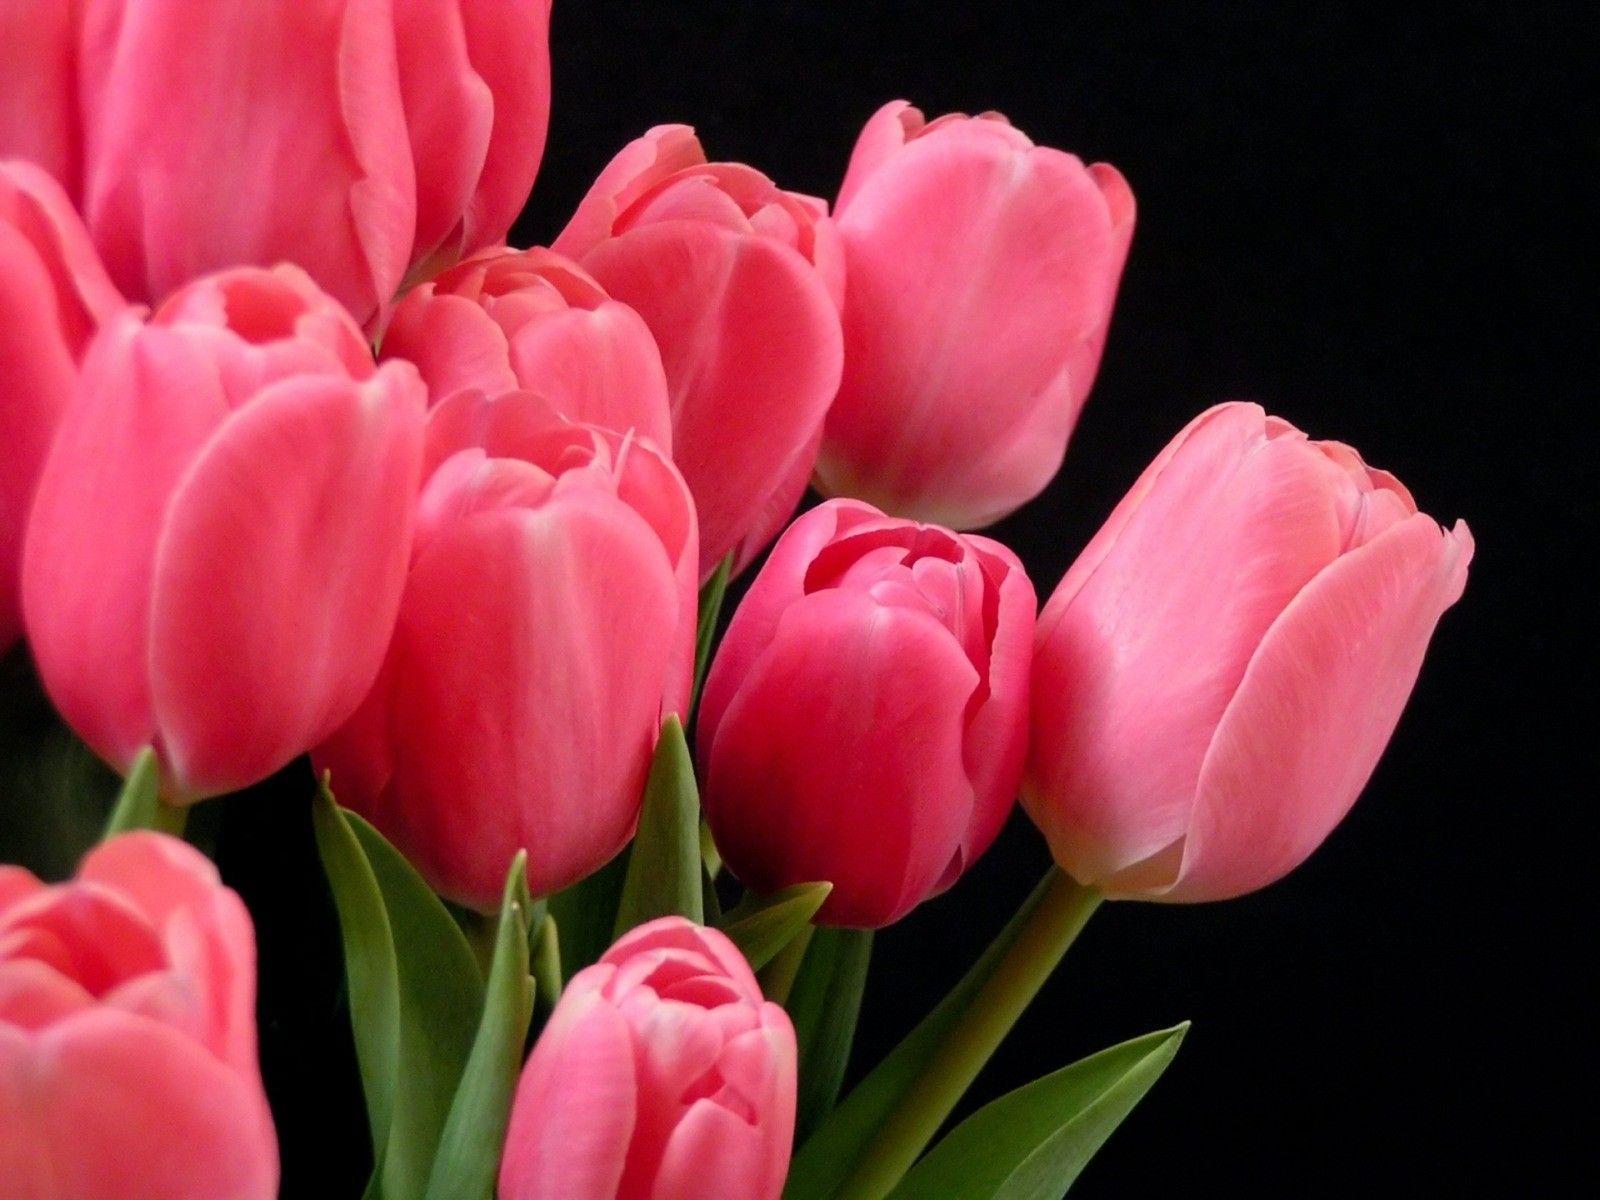 Tulips. Tulips image download « Flower Loving. Flowers, Flower